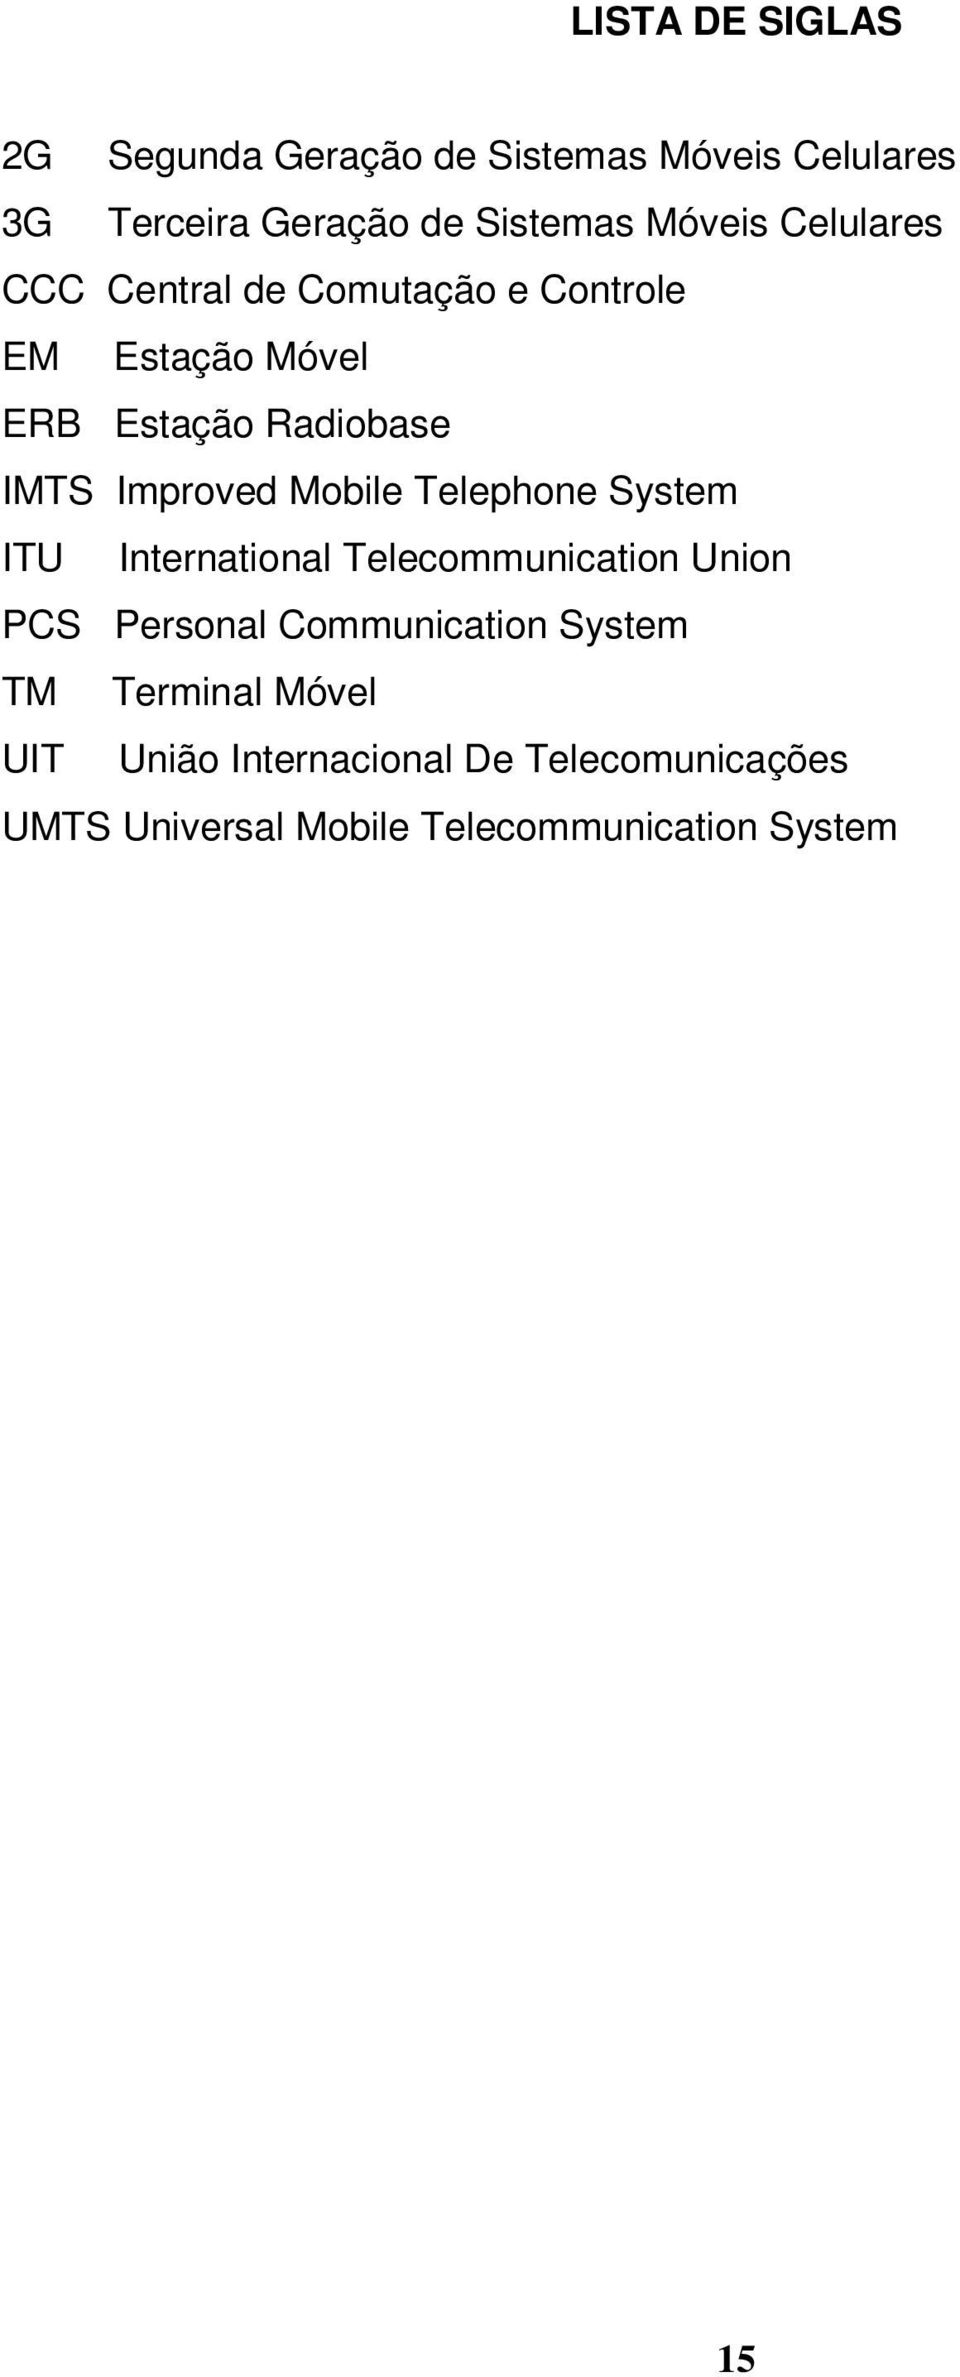 Mobile Telephone System ITU International Telecommunication Union PCS Personal Communication System